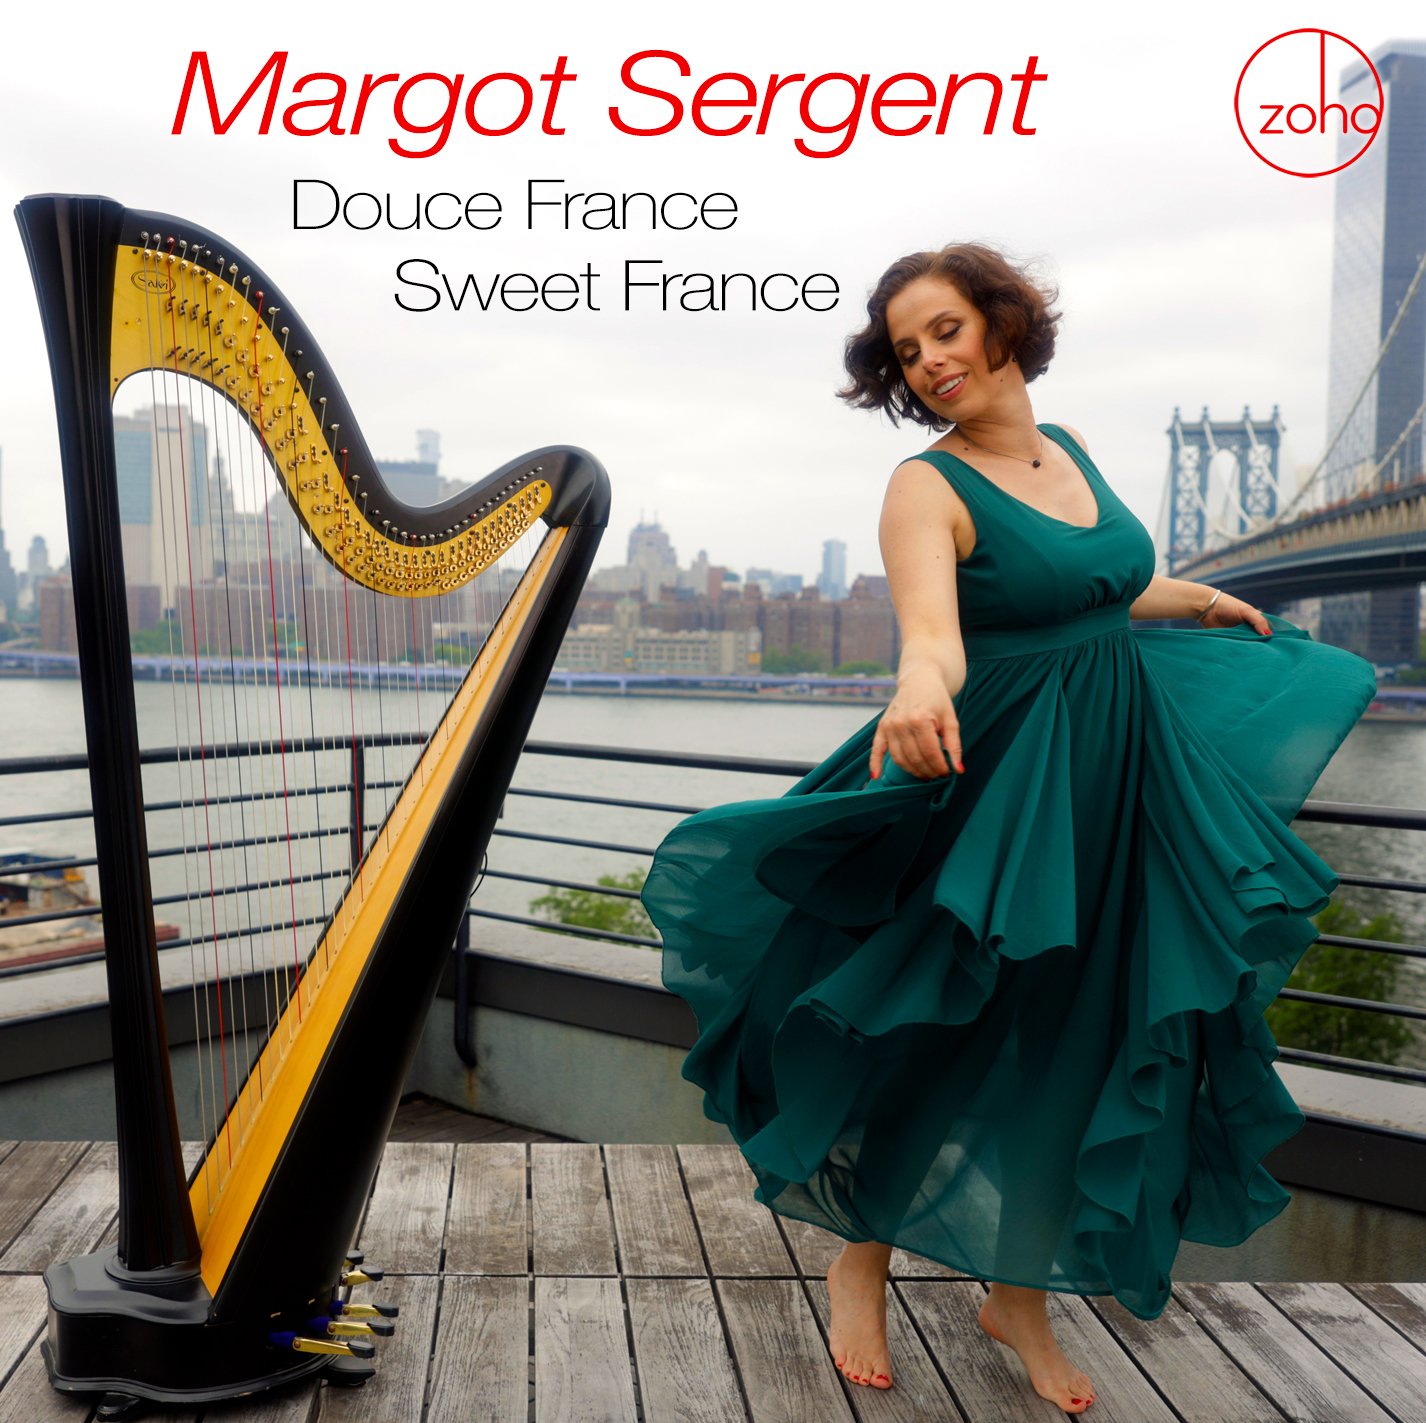 Margot Sergent - Douce France (Producer/Arranger)